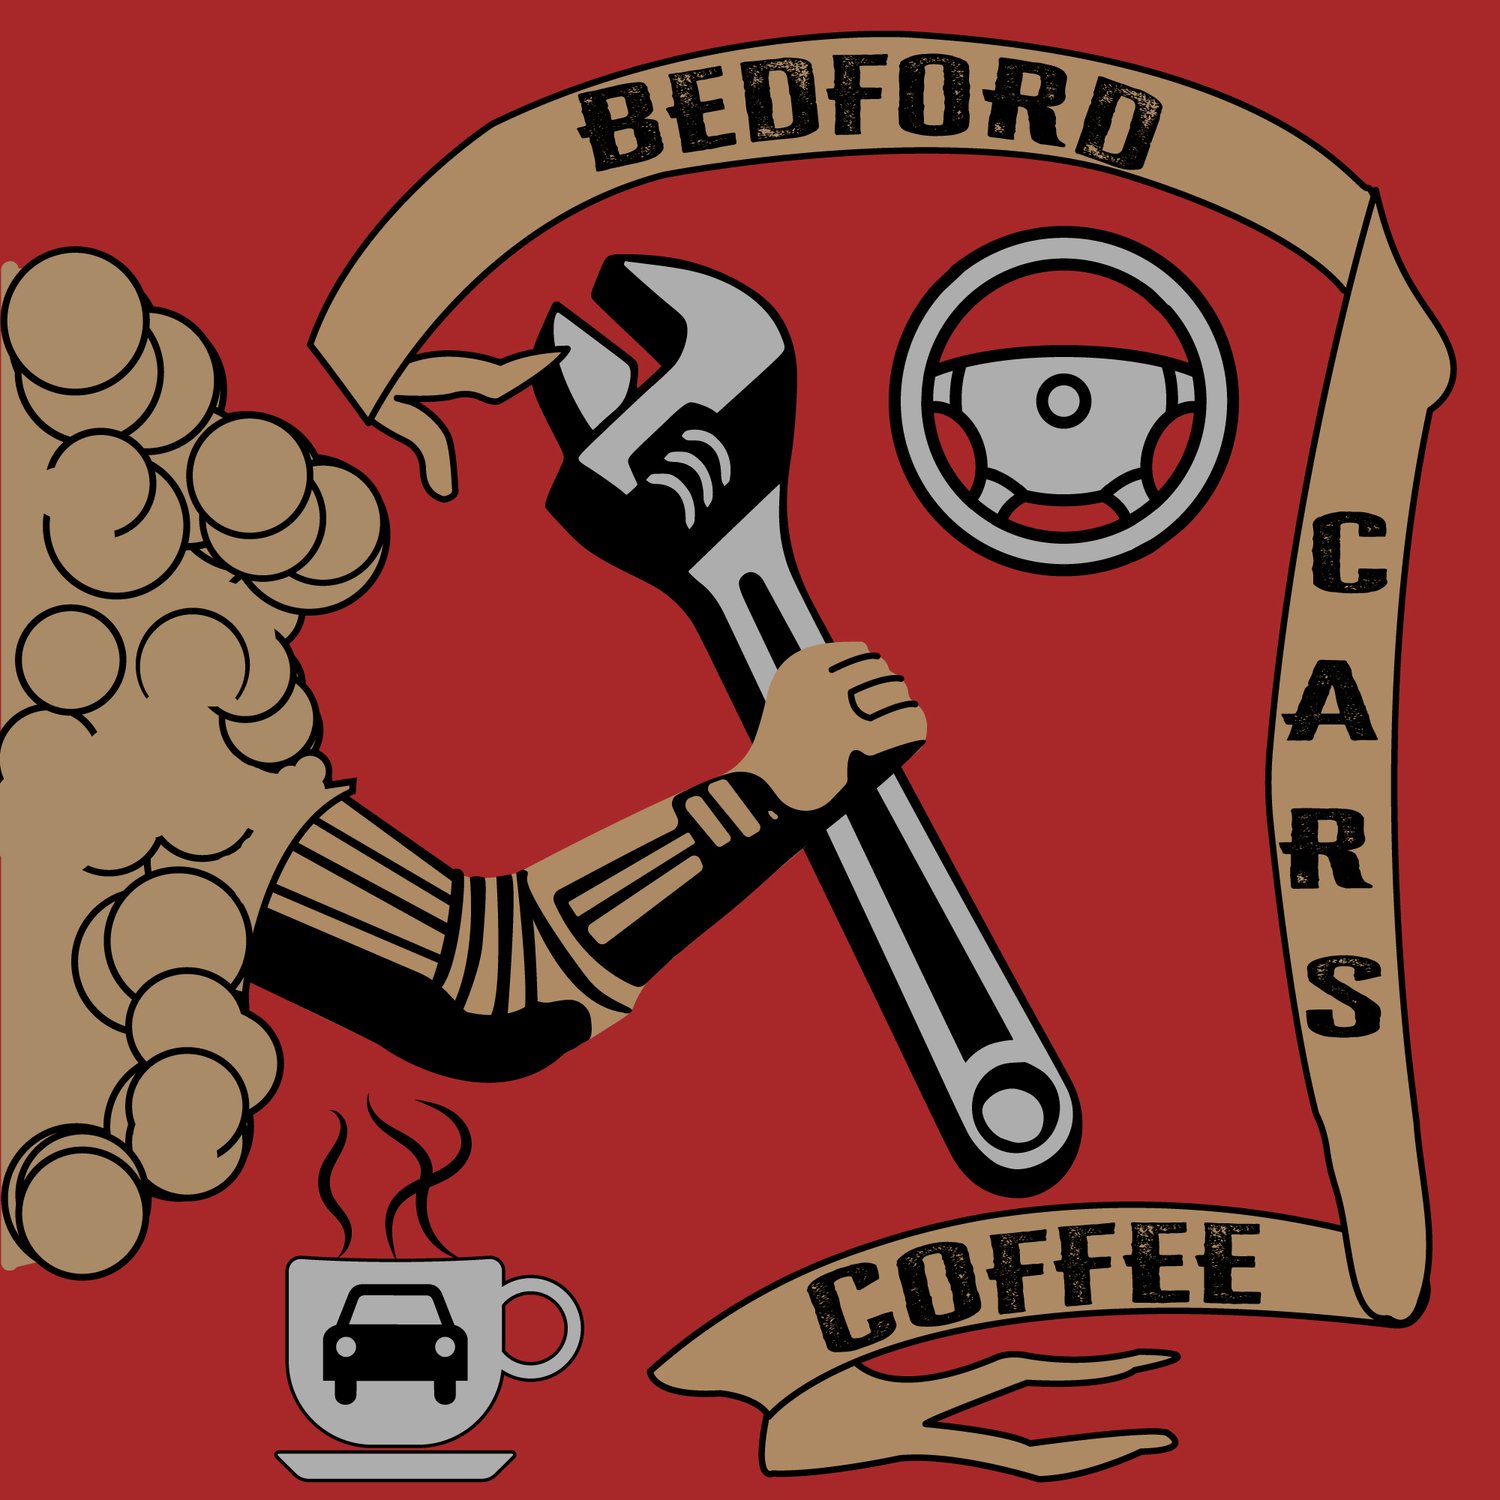 Bedford MA Cars &amp; Coffee